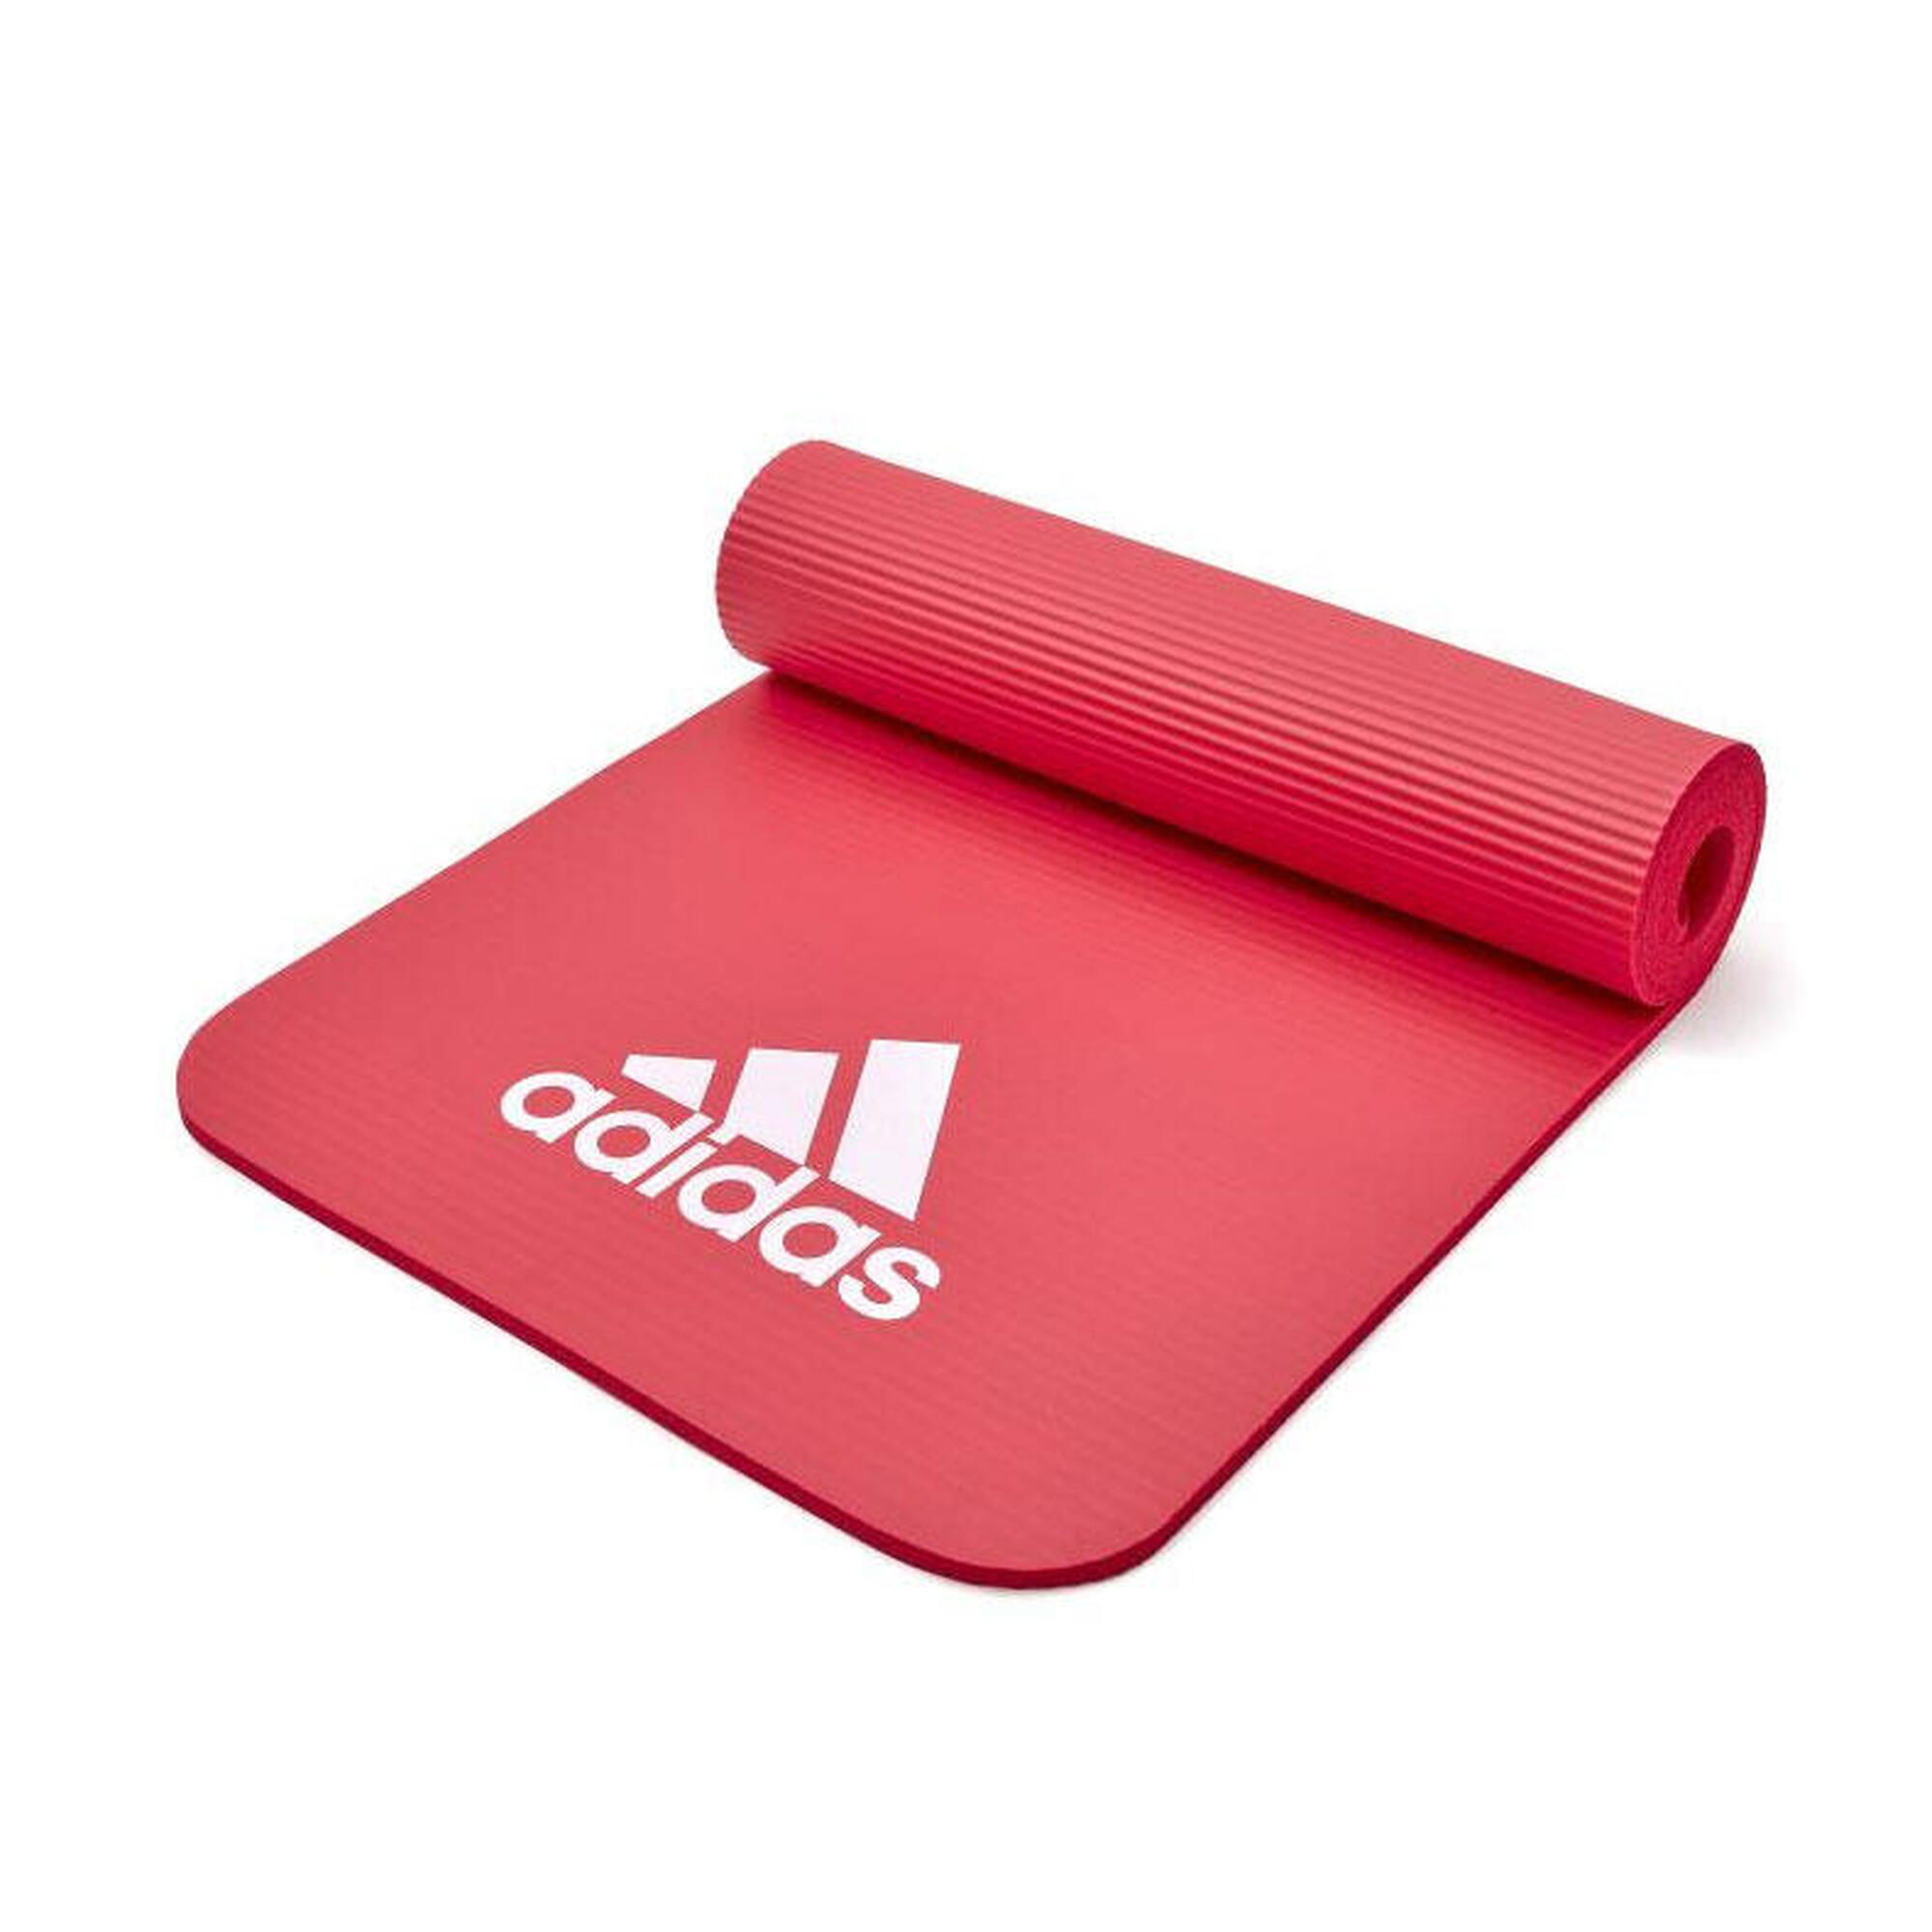 Esterilla de fitness Adidas - 10mm